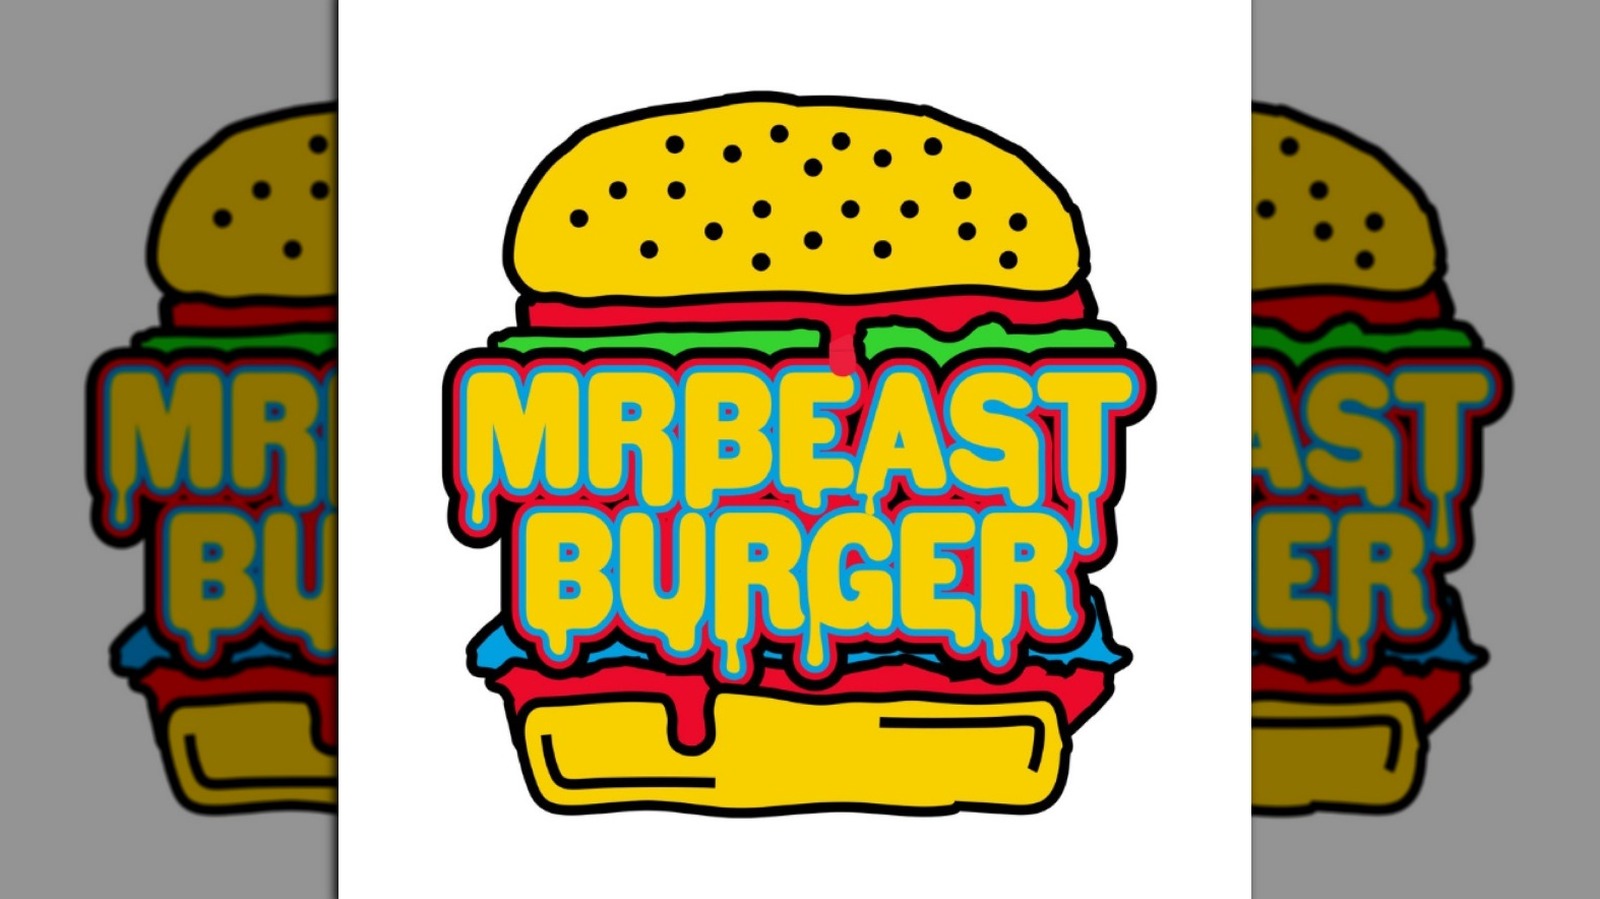 Pandemic eats: The MrBeast Burger – The Classic